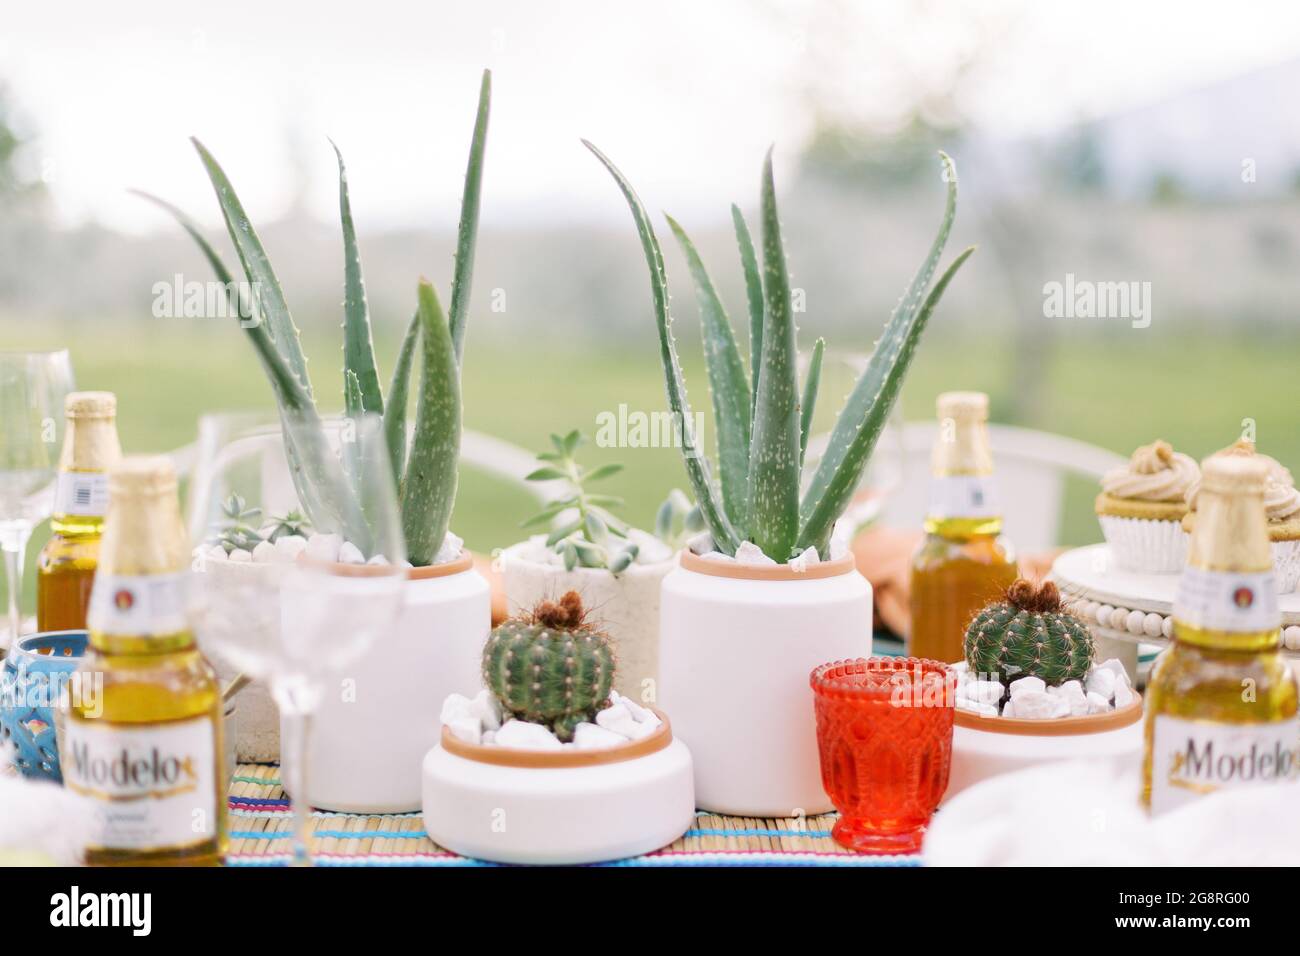 alo vera and cactus on cinco de mayo party table Stock Photo